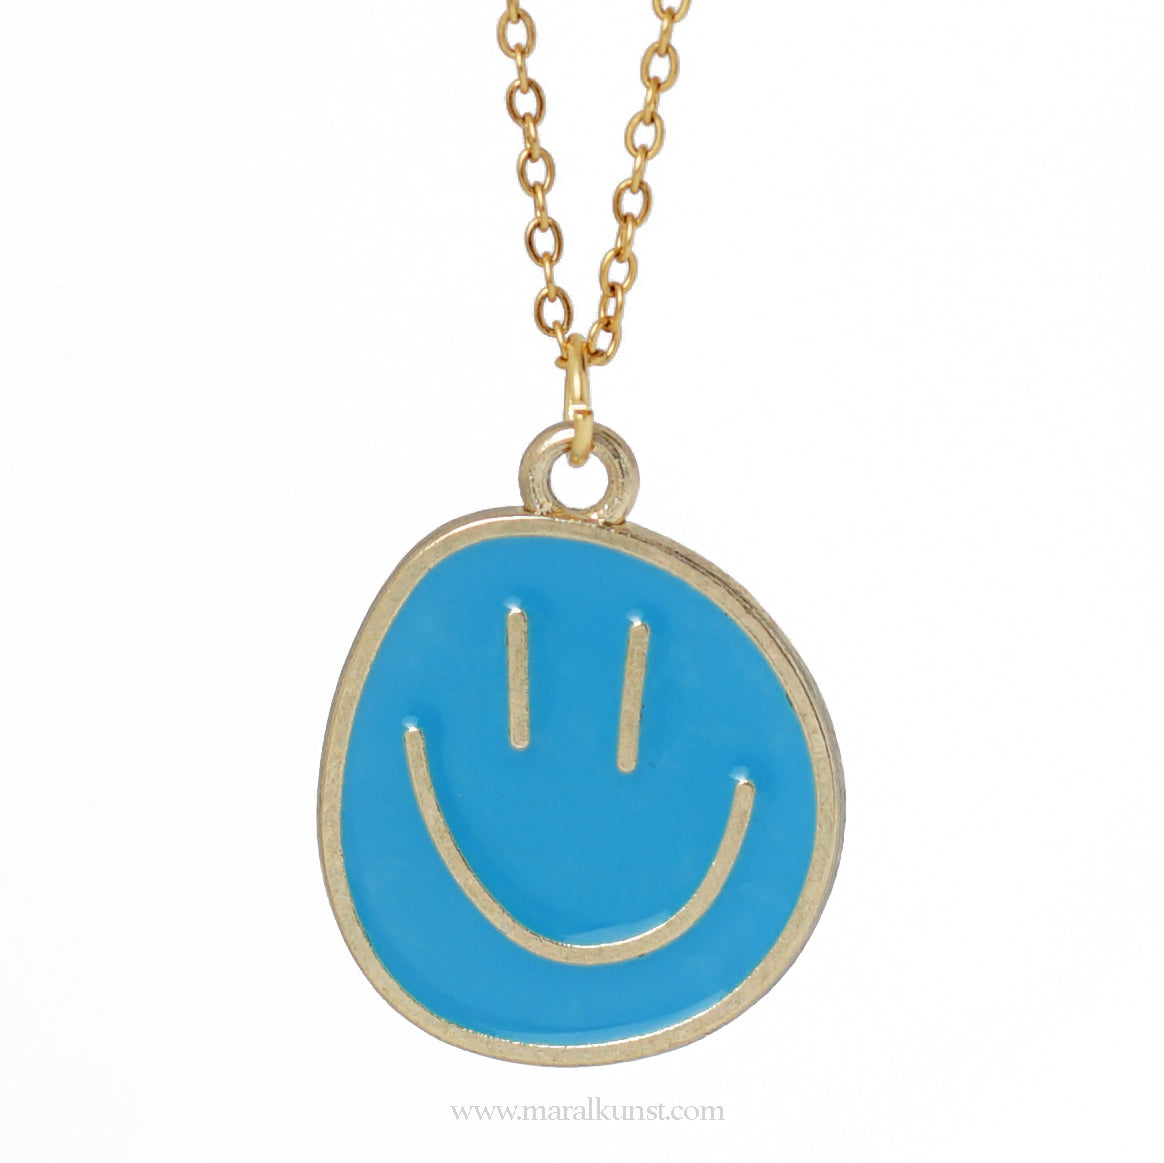 Blue smiley face necklace